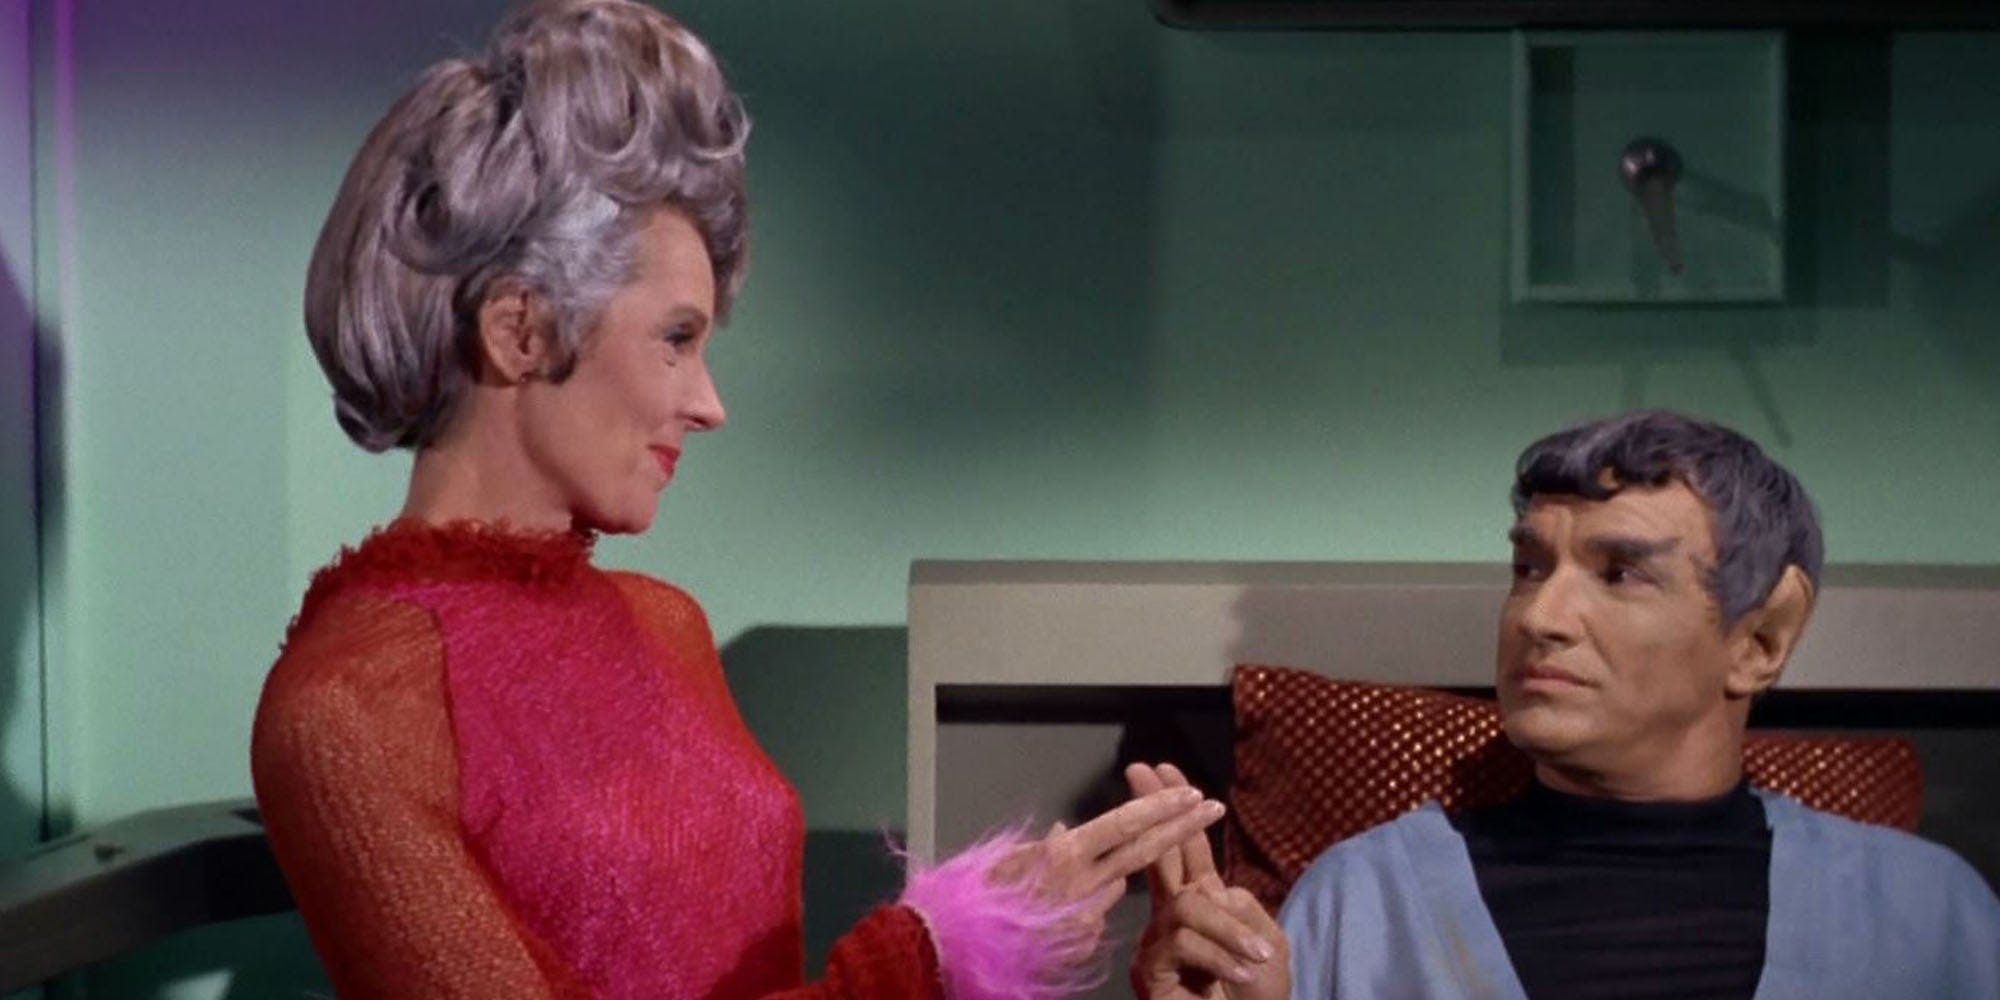 Amanda and Sarek in a biobed touching fingers from STar Trek the Original Series